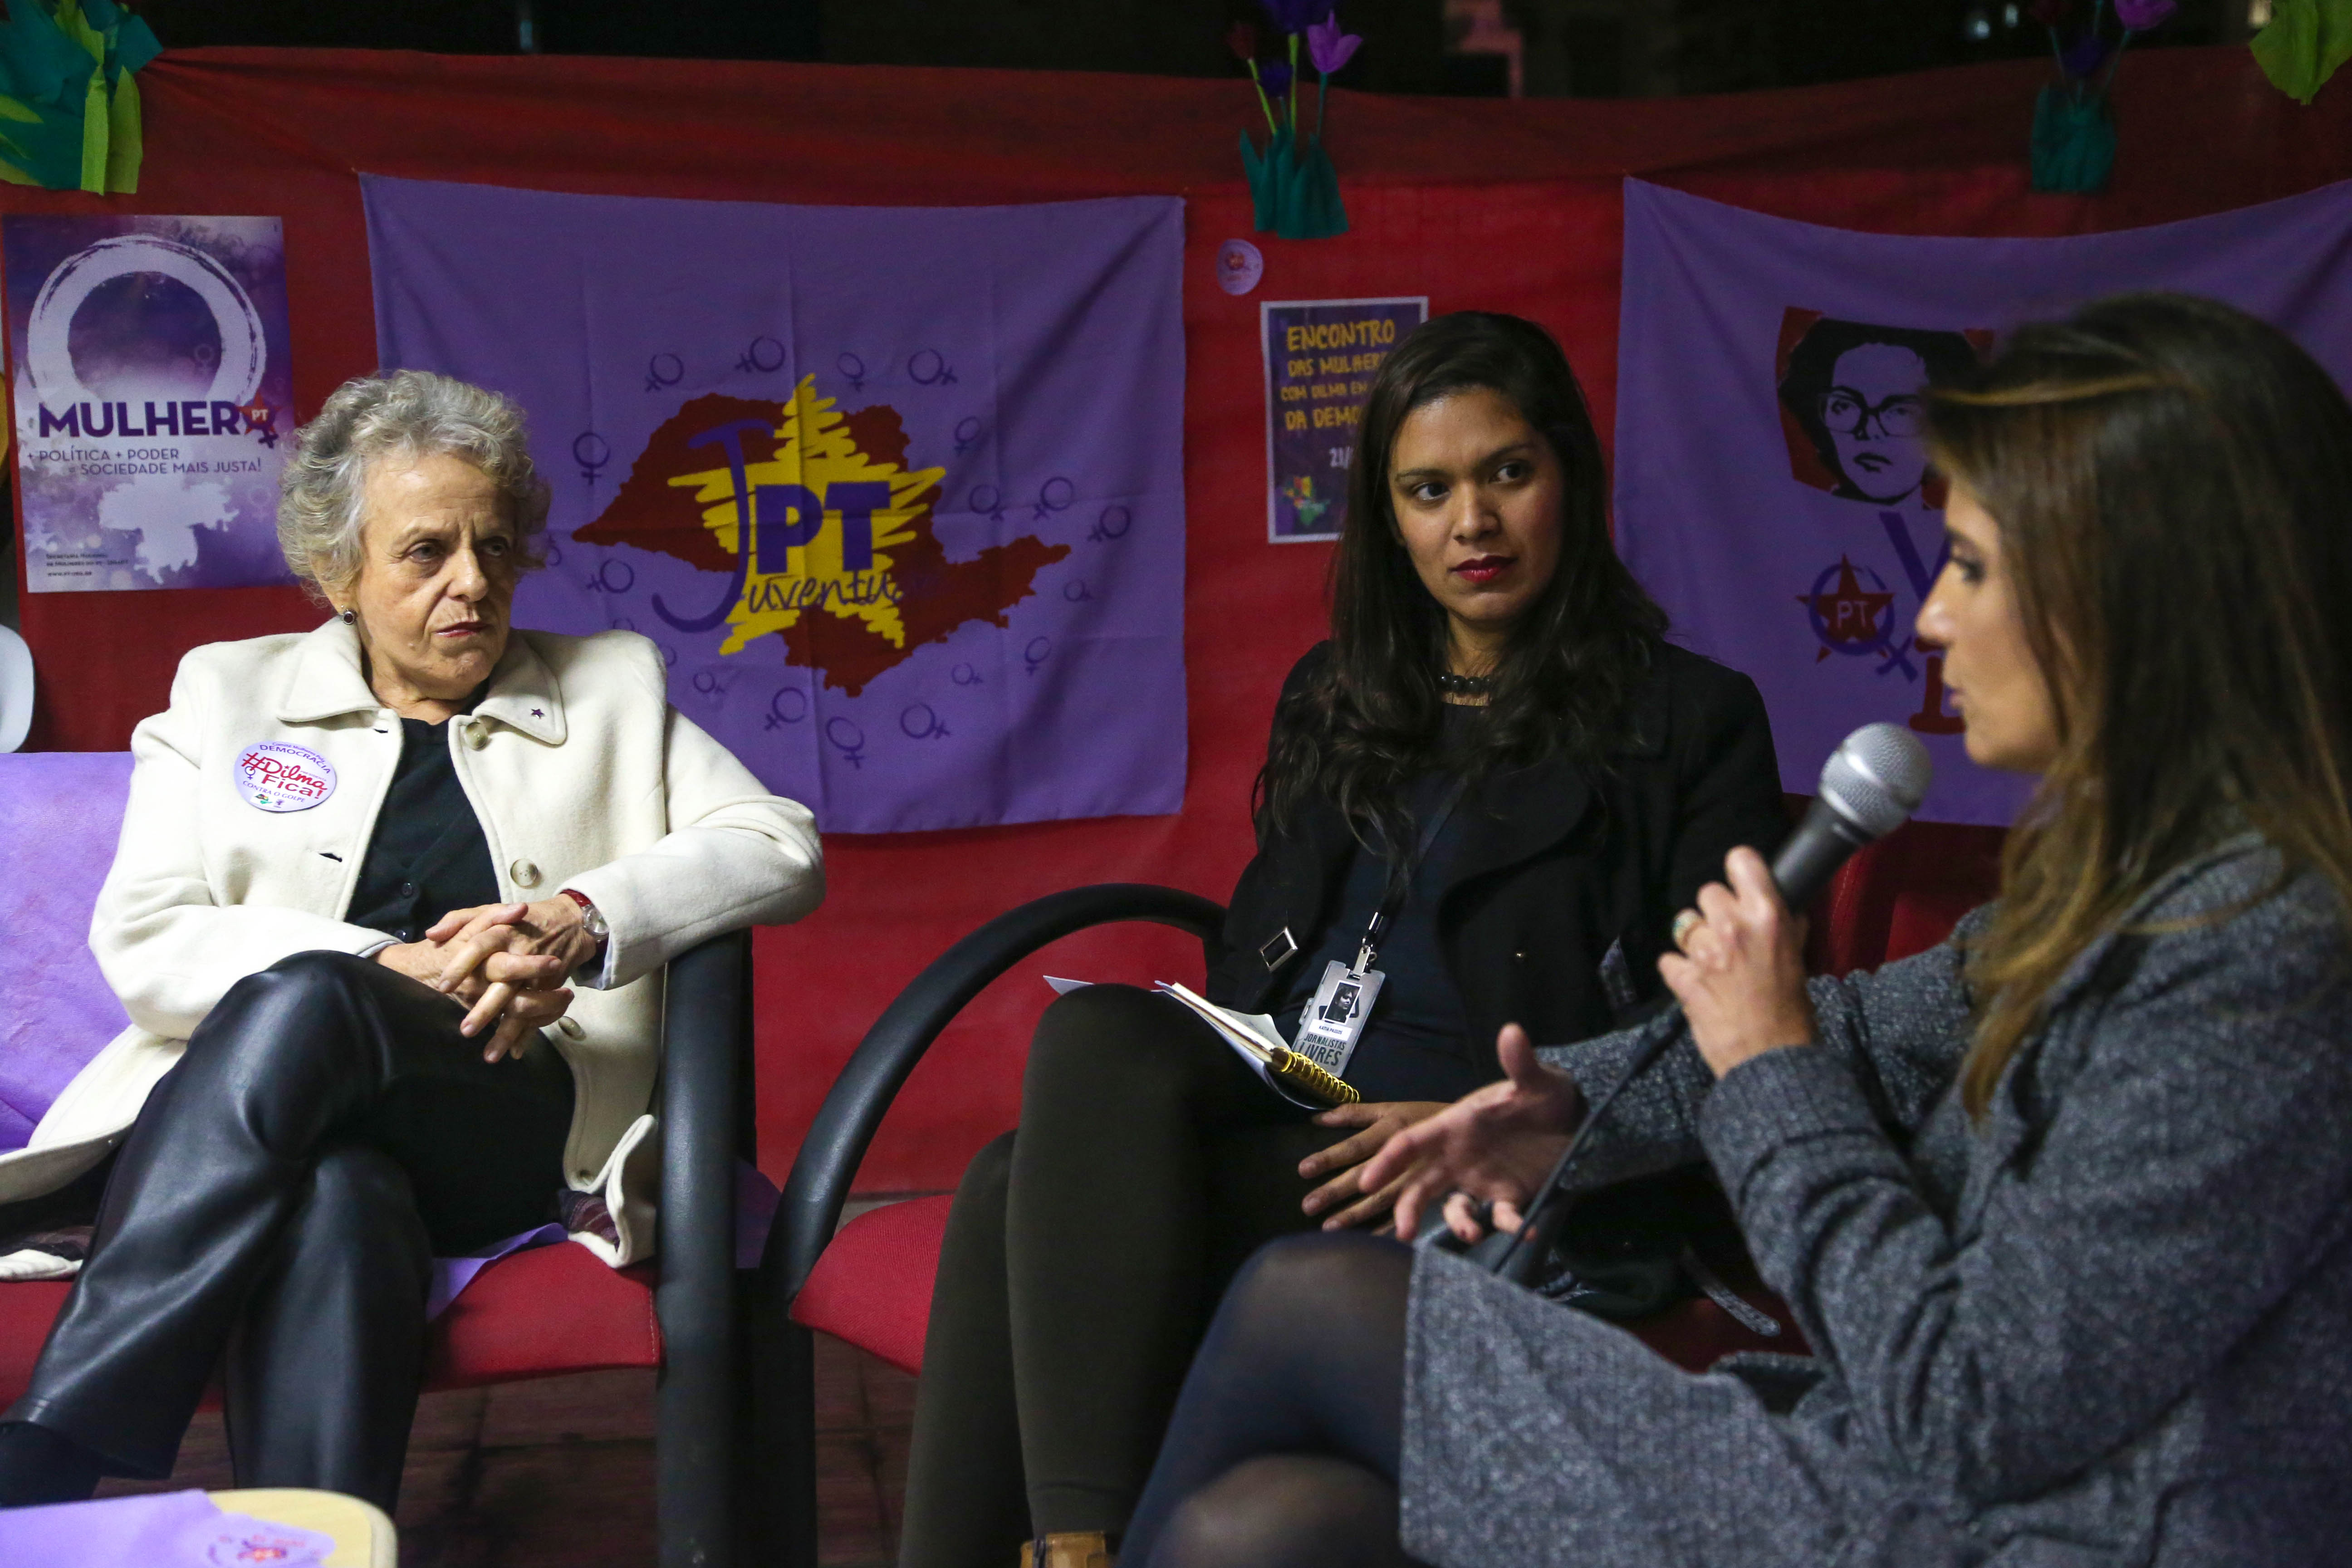 Mulheres contra o golpe: Talk Show debate retrocessos de Temer